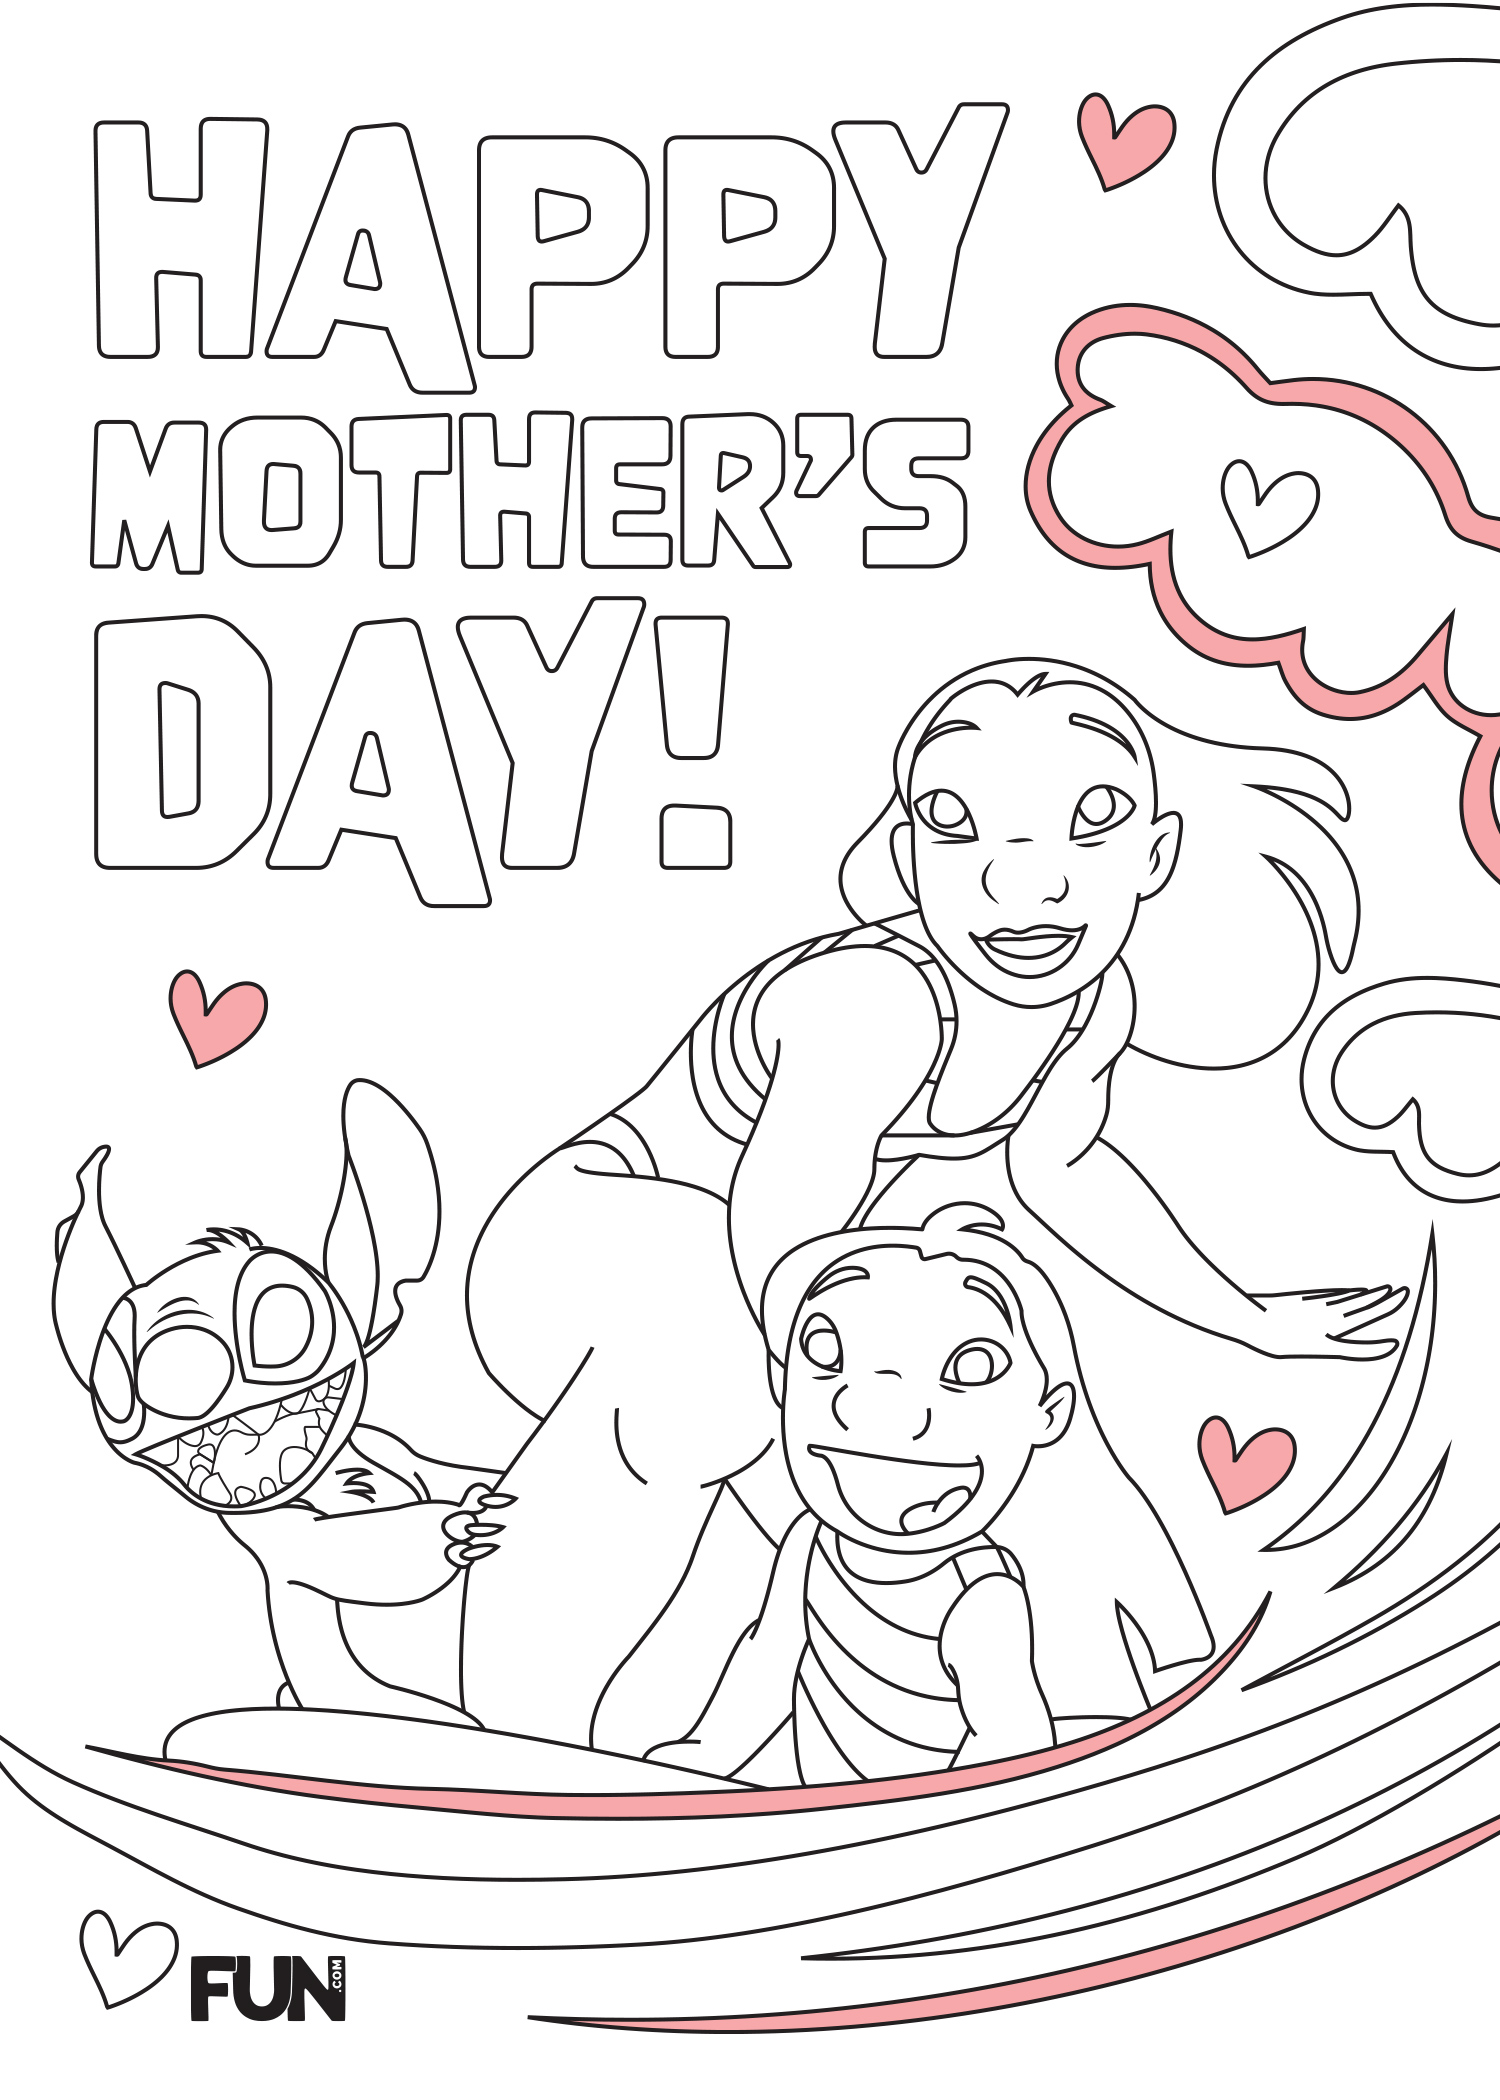 Lilo & Stitch Mother's Day Card